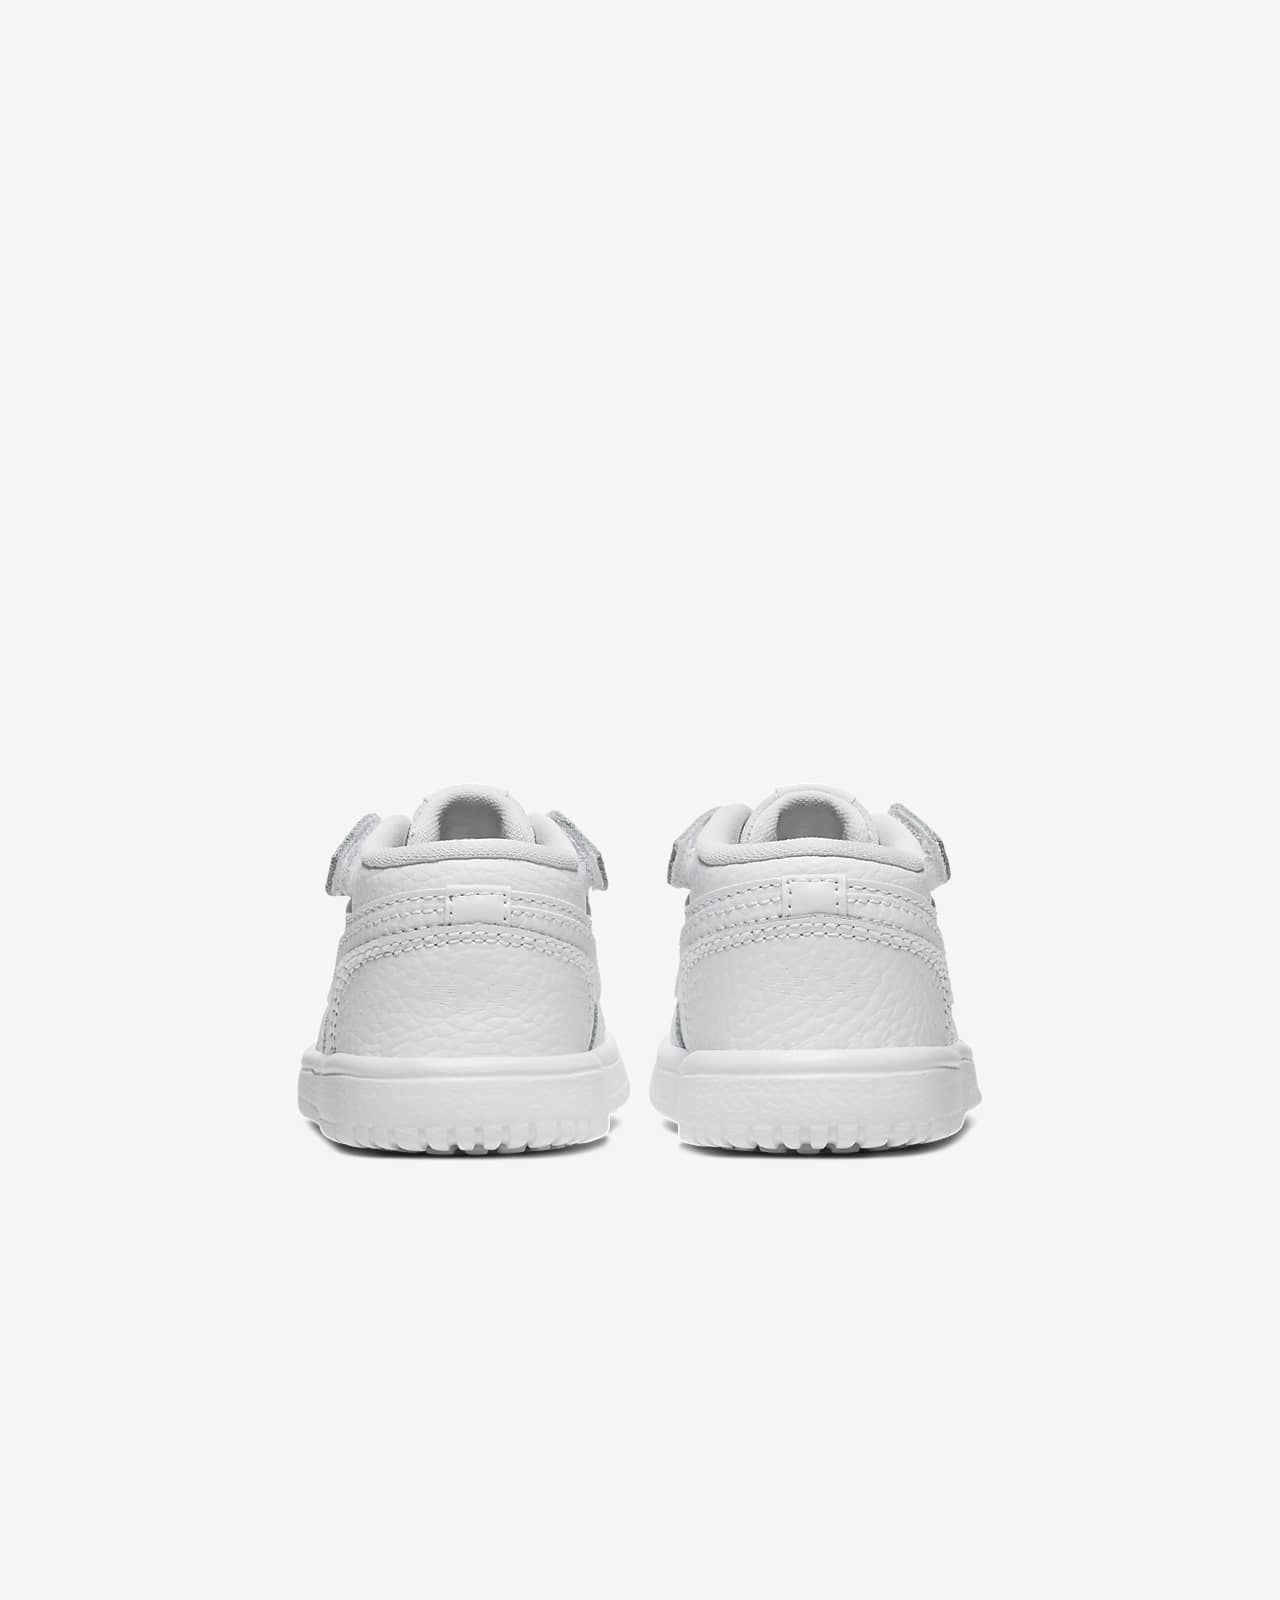 white nike toddler shoes